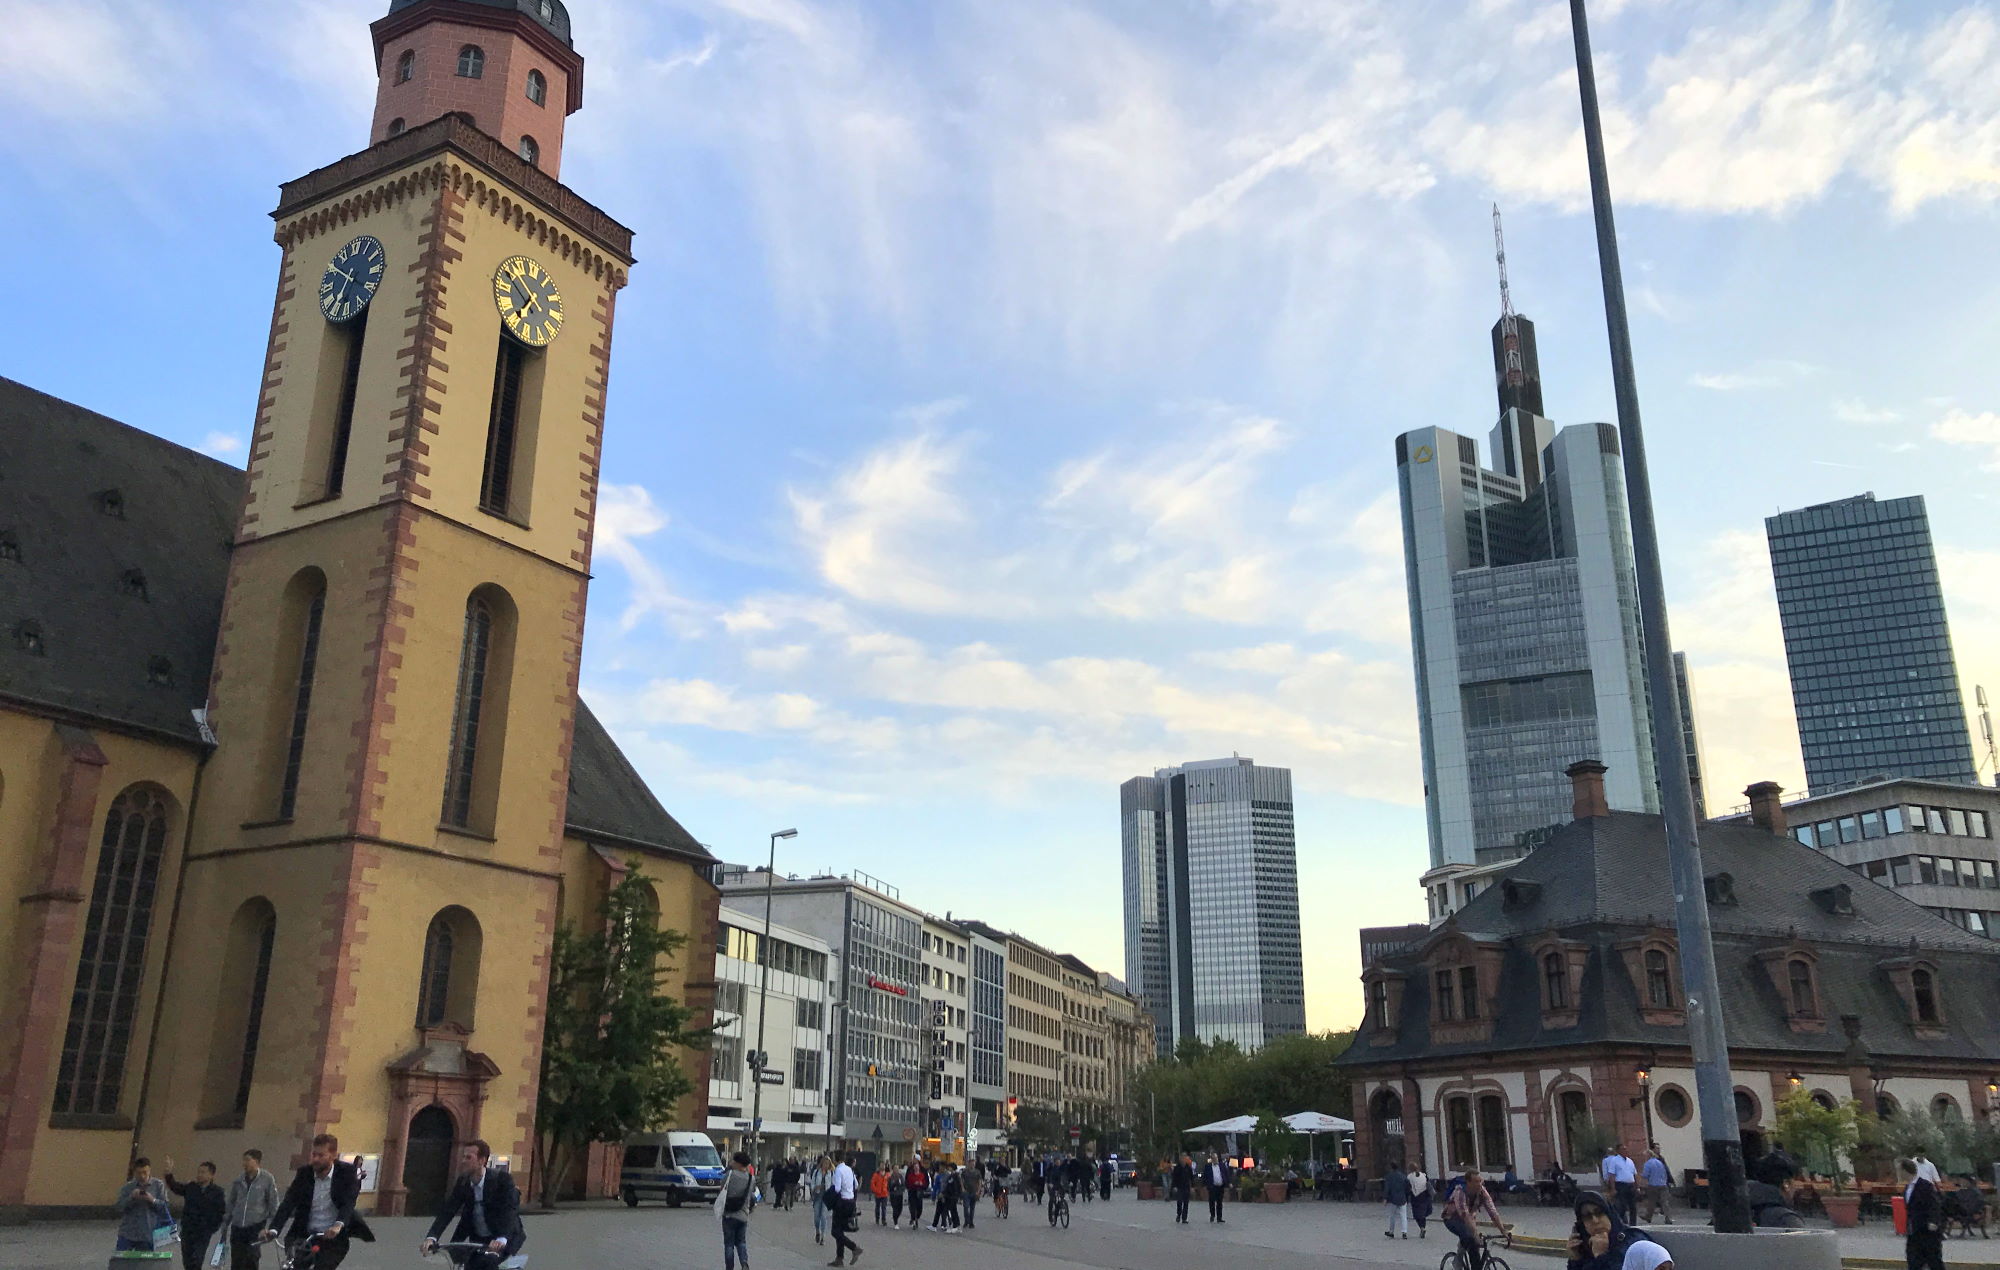 Contrast between old and new in Frankfurt